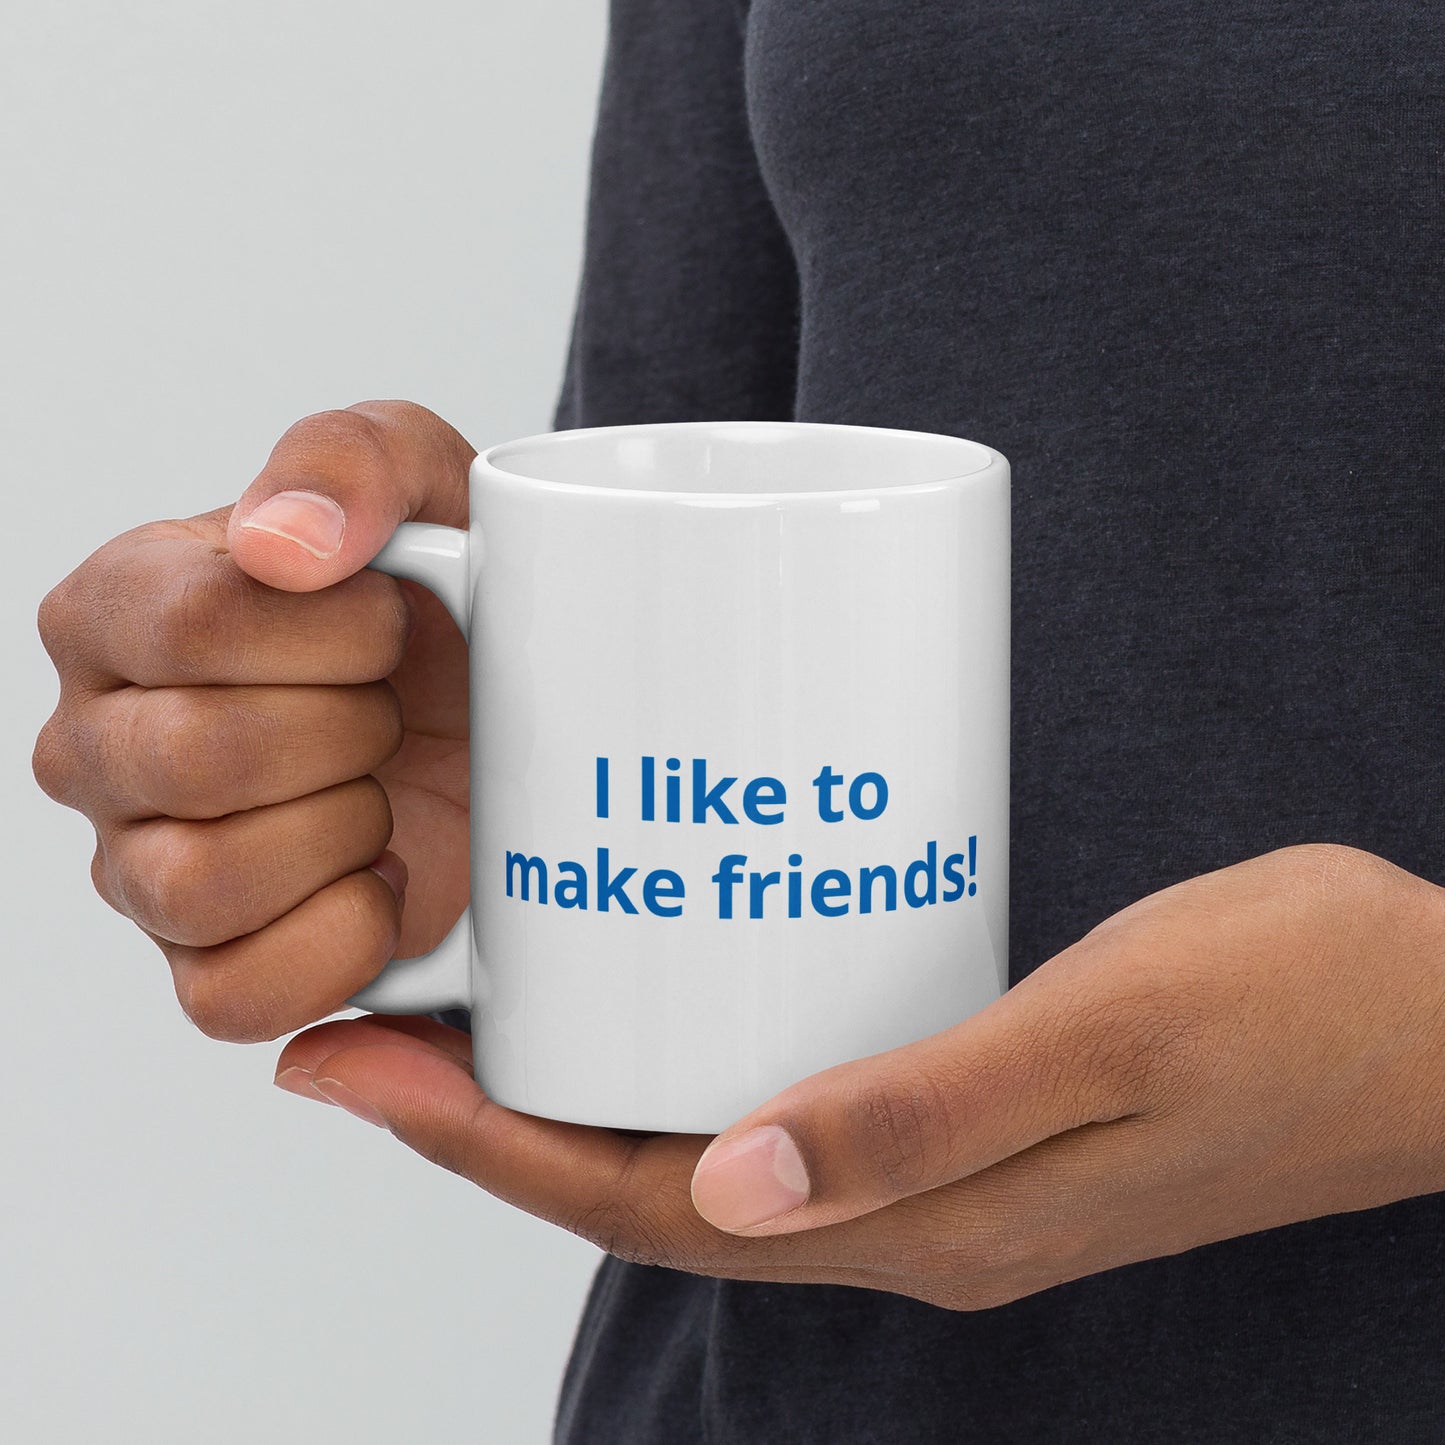 I like to make friends. - White glossy mug